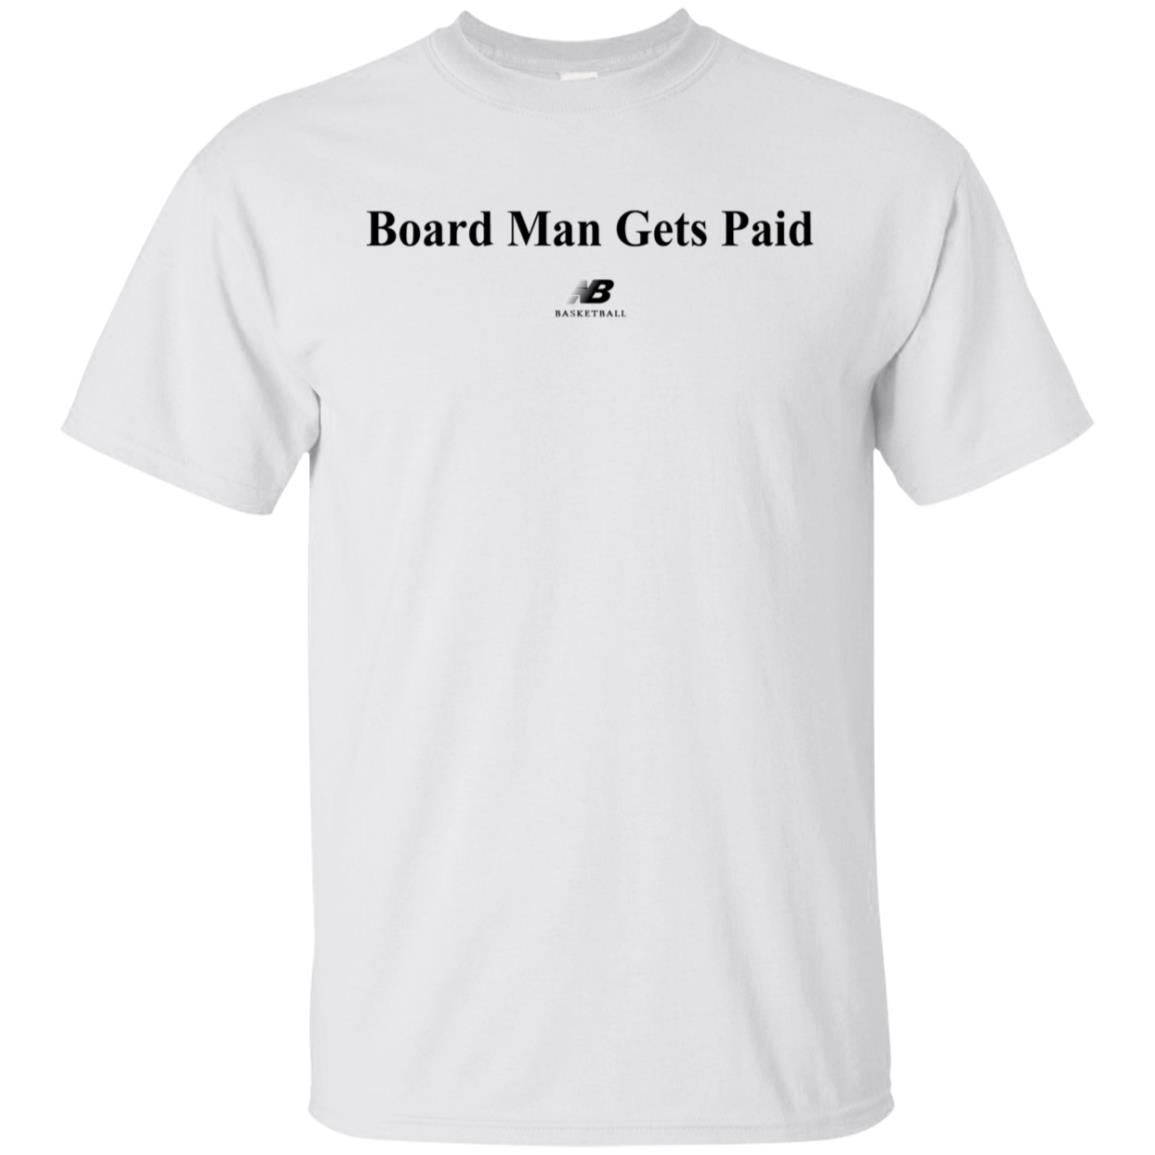 new balance board man gets paid shirt